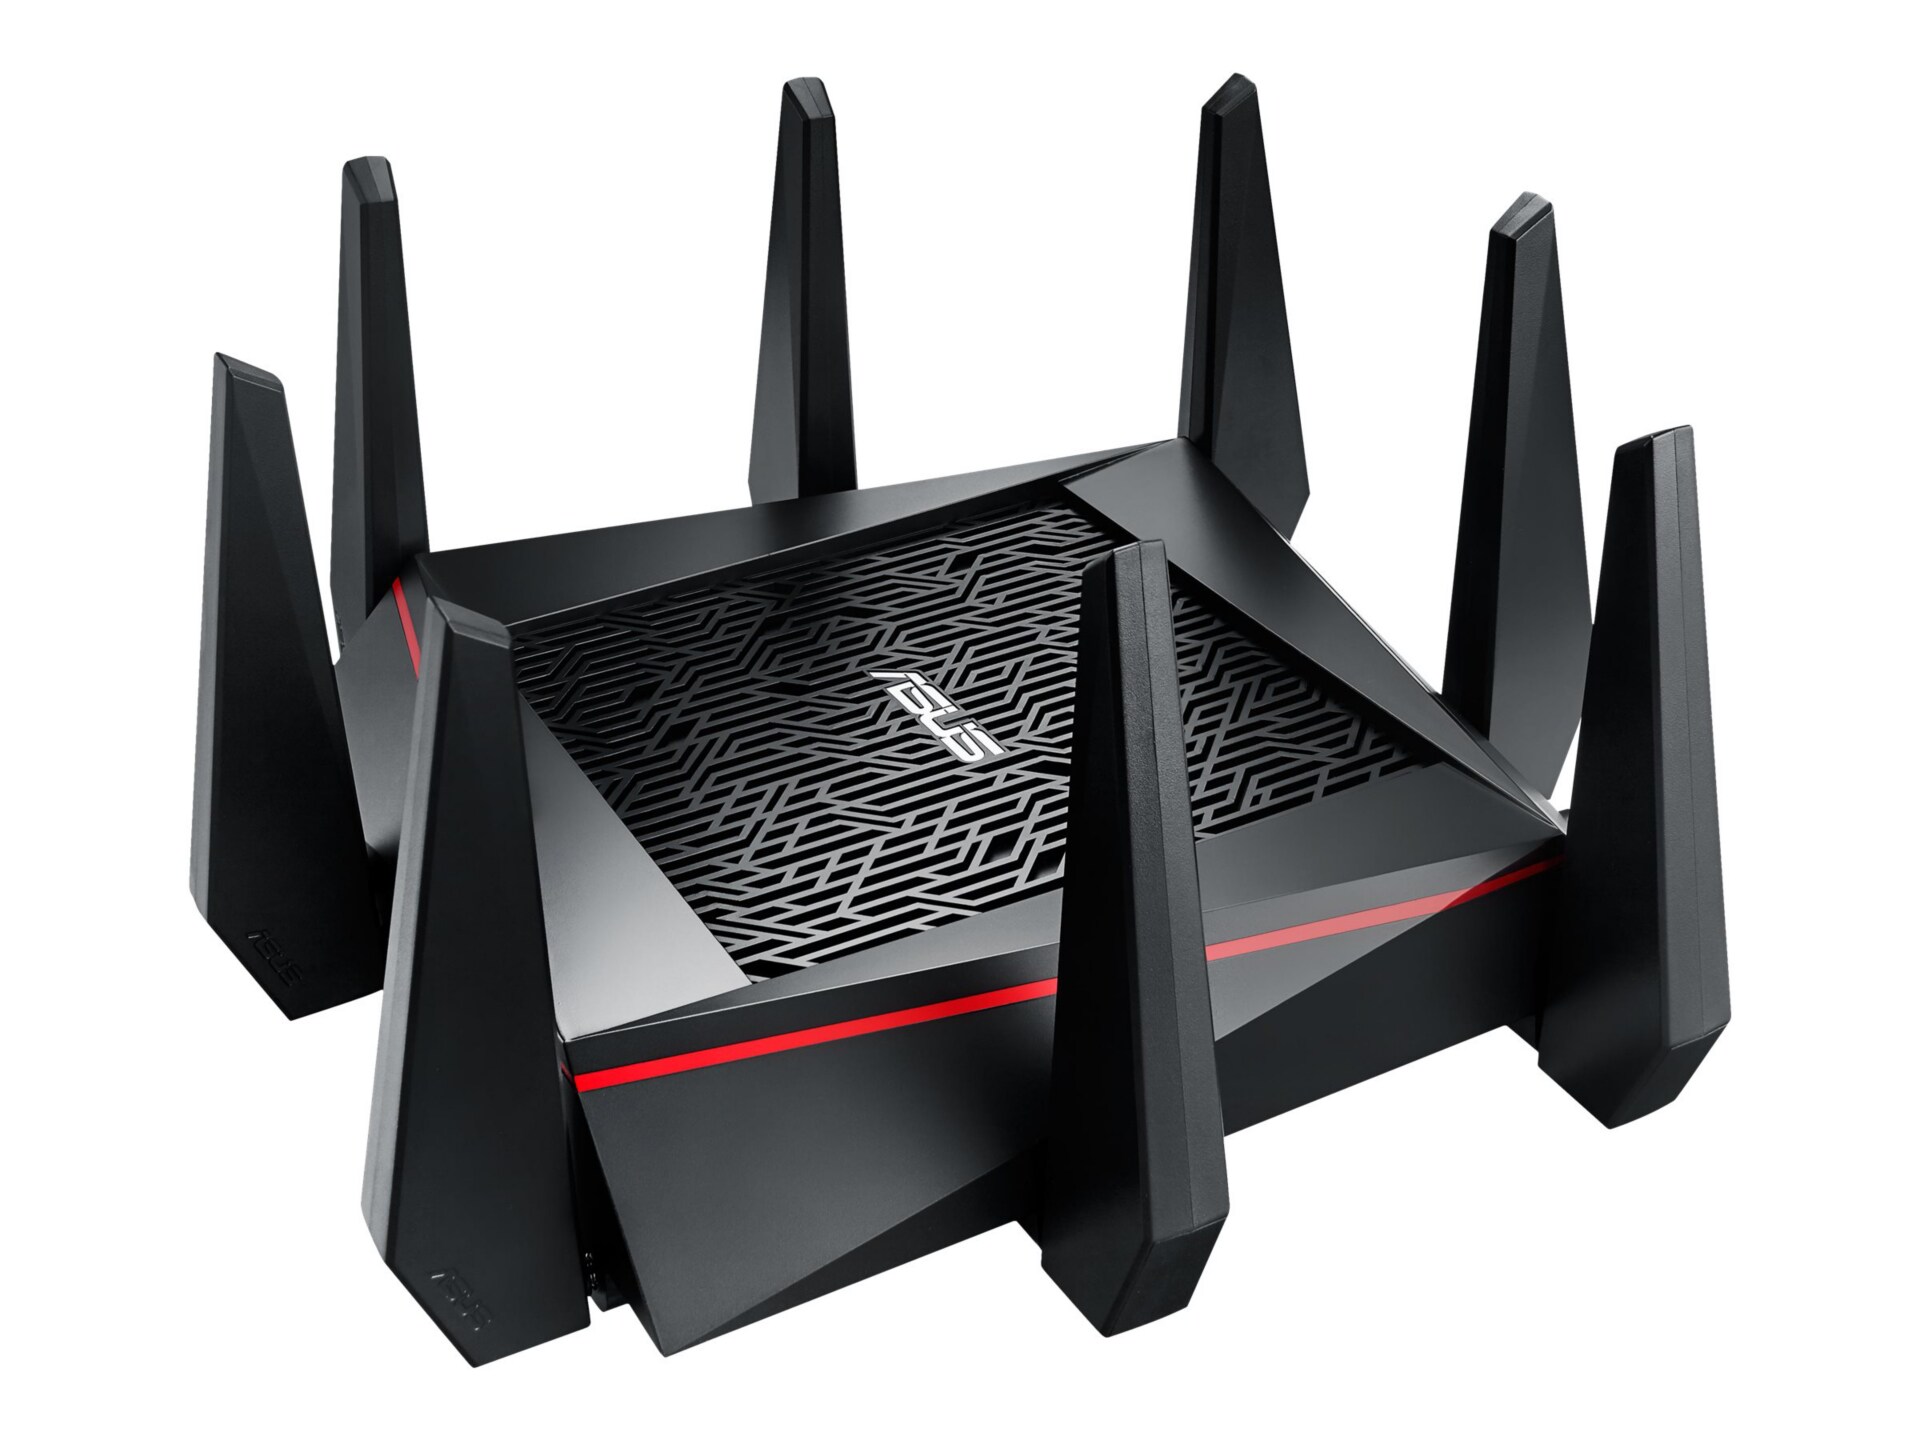 ASUS RT-AC5300 - wireless router - 802.11a/b/g/n/ac - desktop